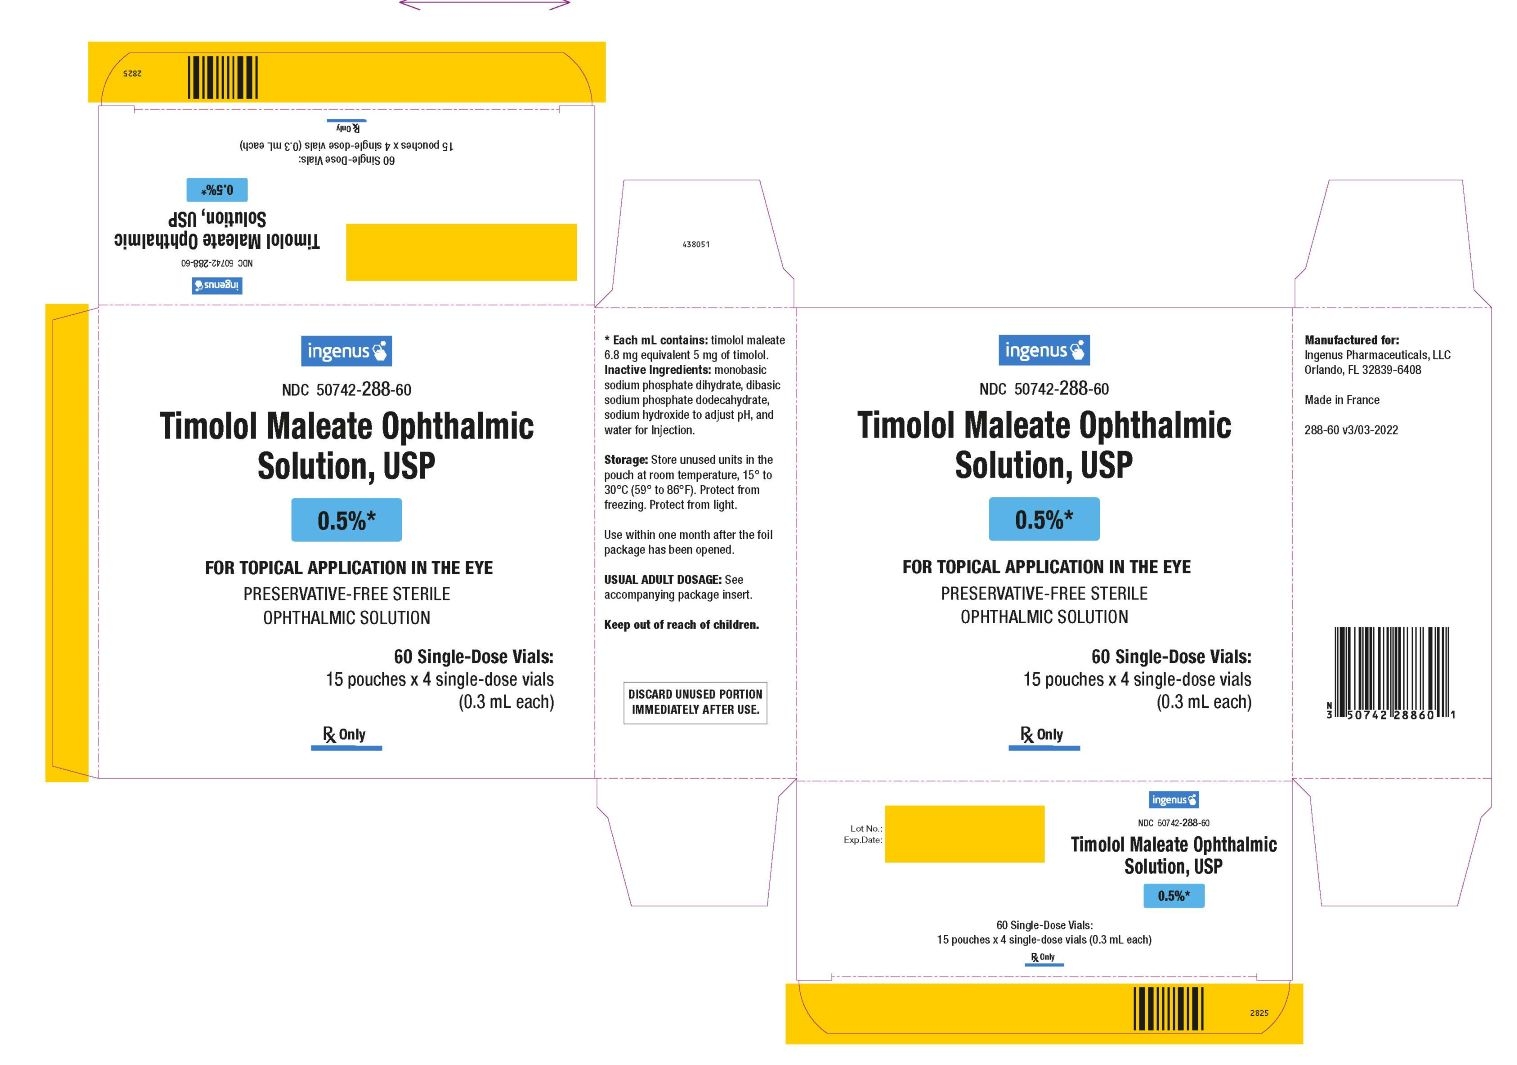 Timolol Maleate Ophthalmic Solution USP, 0.5% - Carton Label